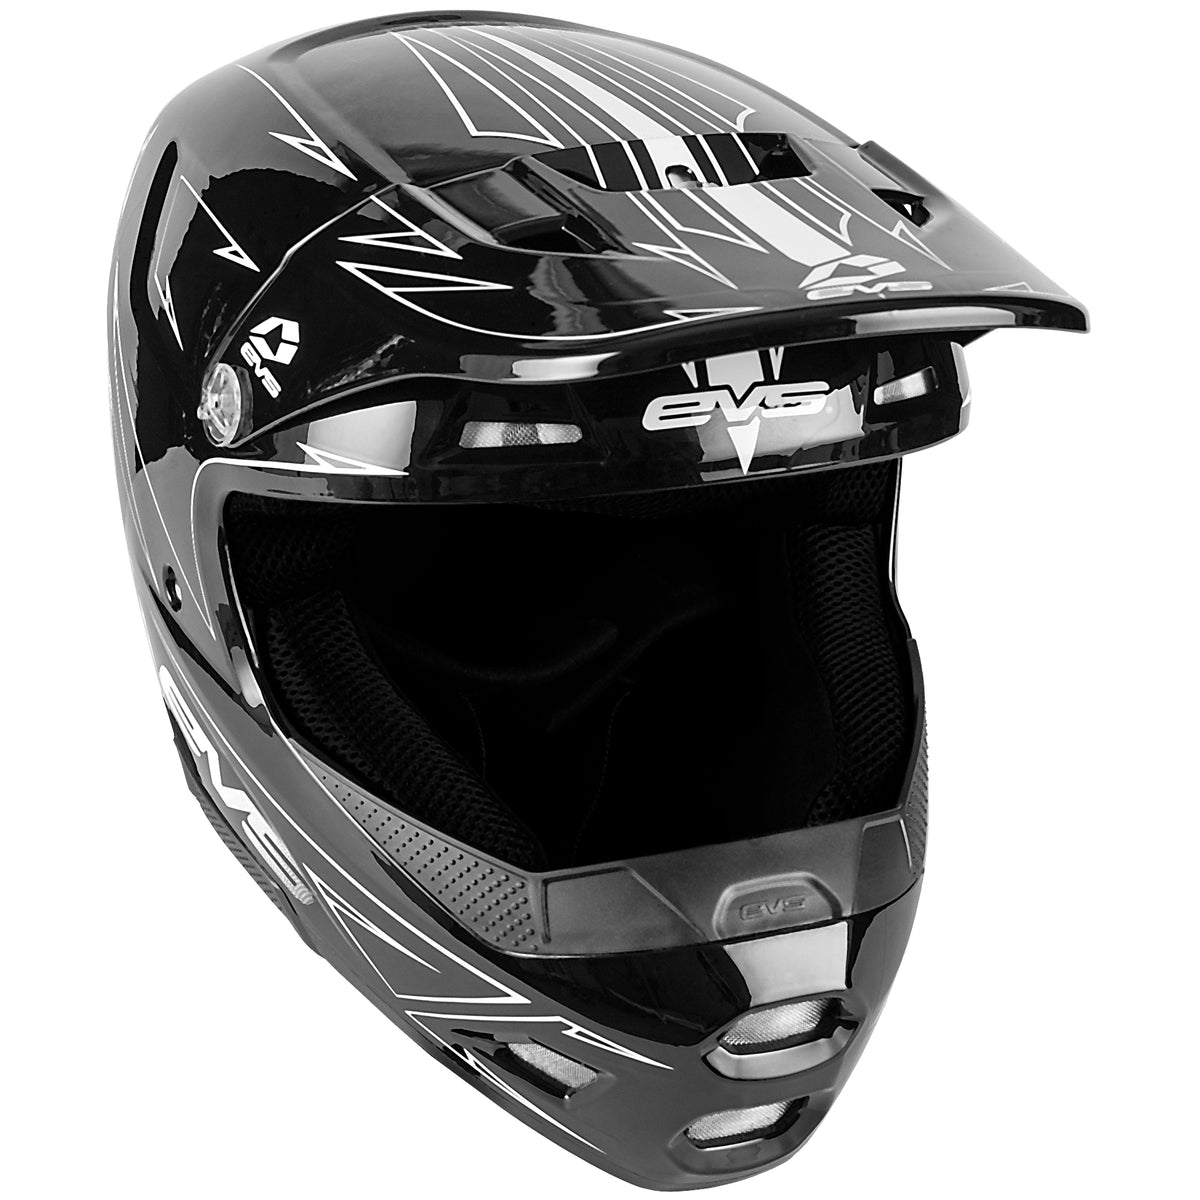 T3 Youth Helmet - 50/Fifty Black - EVS Sports